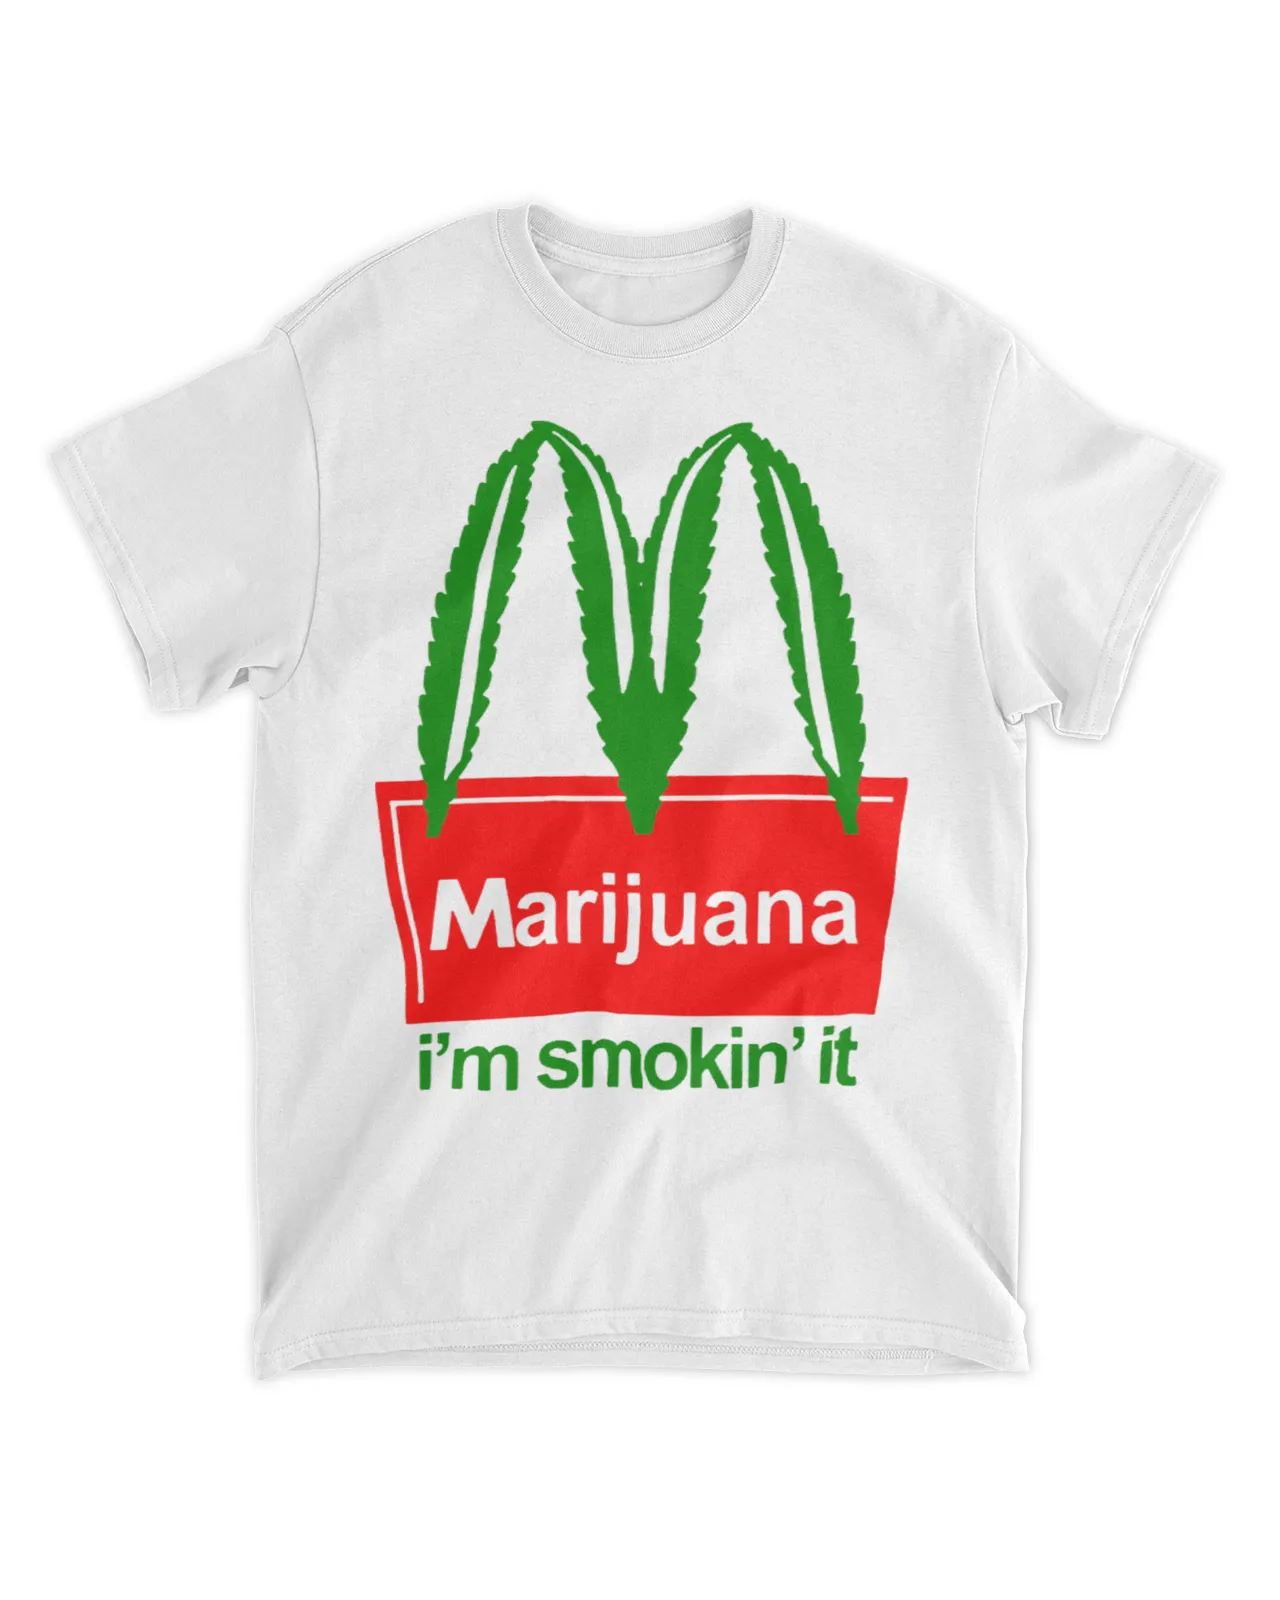  Marijuana I'm smokin' it shirt